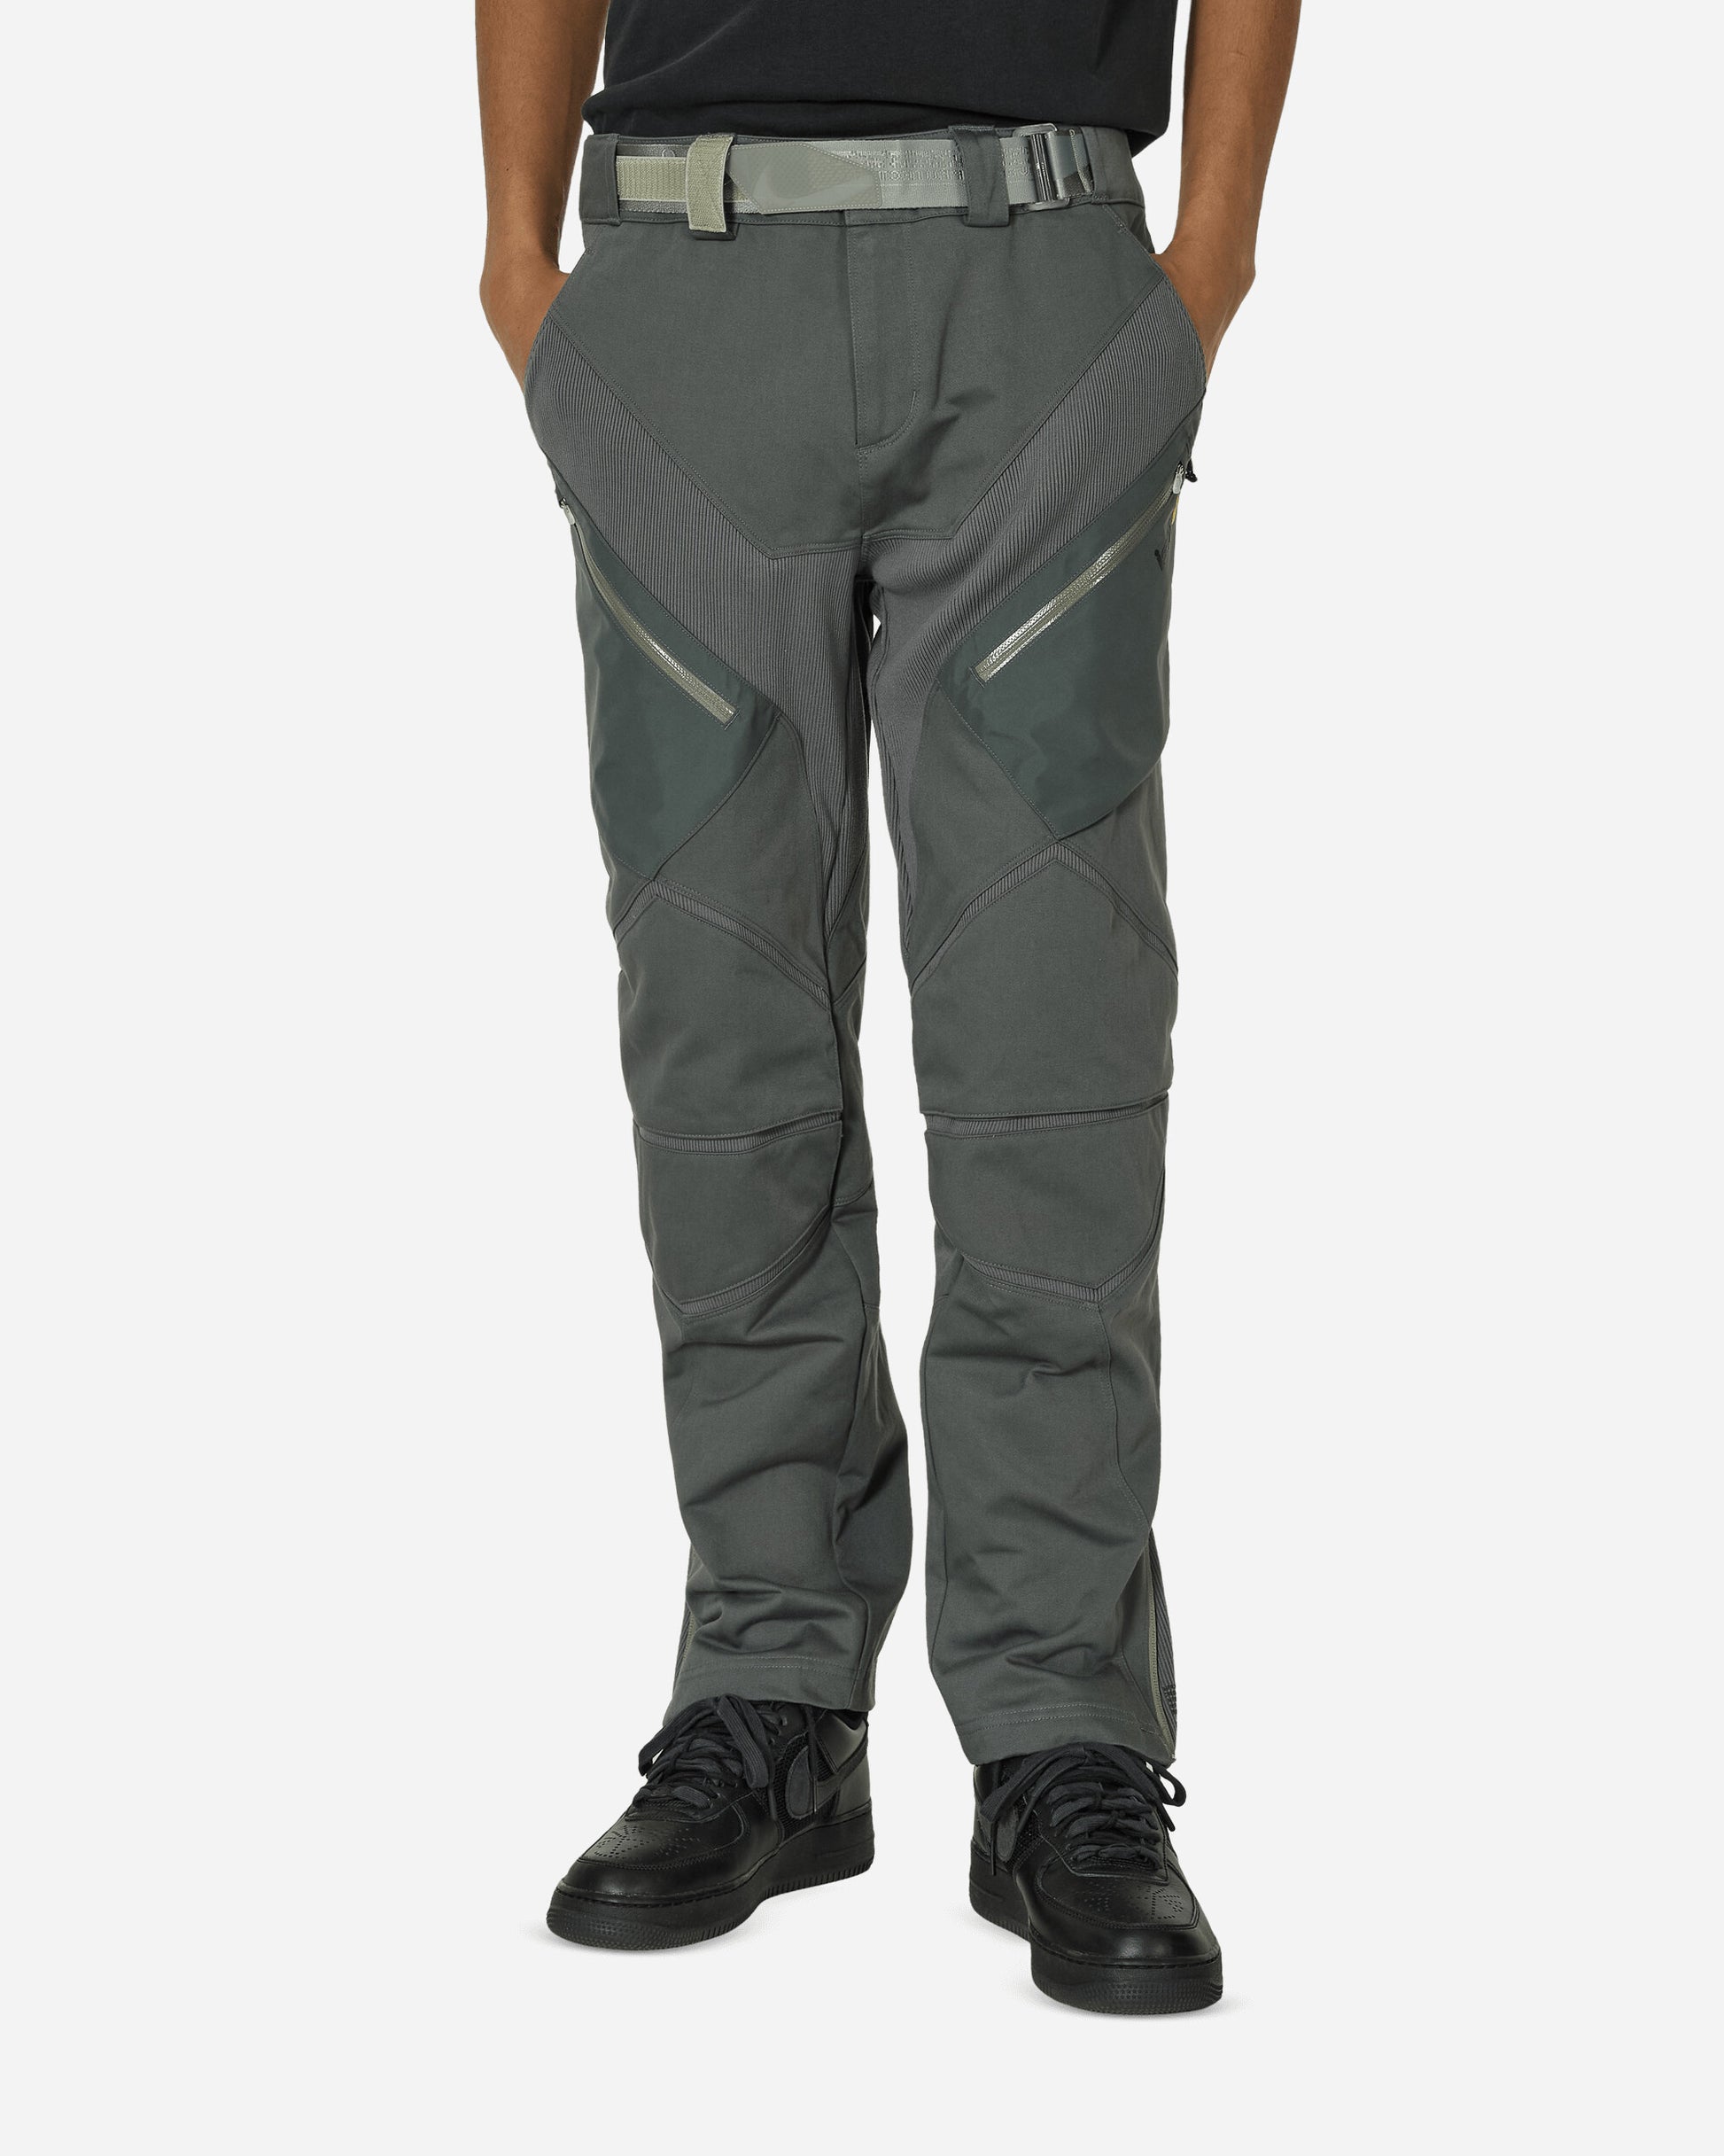 Nike U Nrg Ispa Tstltn Mt Pants Iron Grey/Dark Stucco Pants Sweatpants FJ7371-068